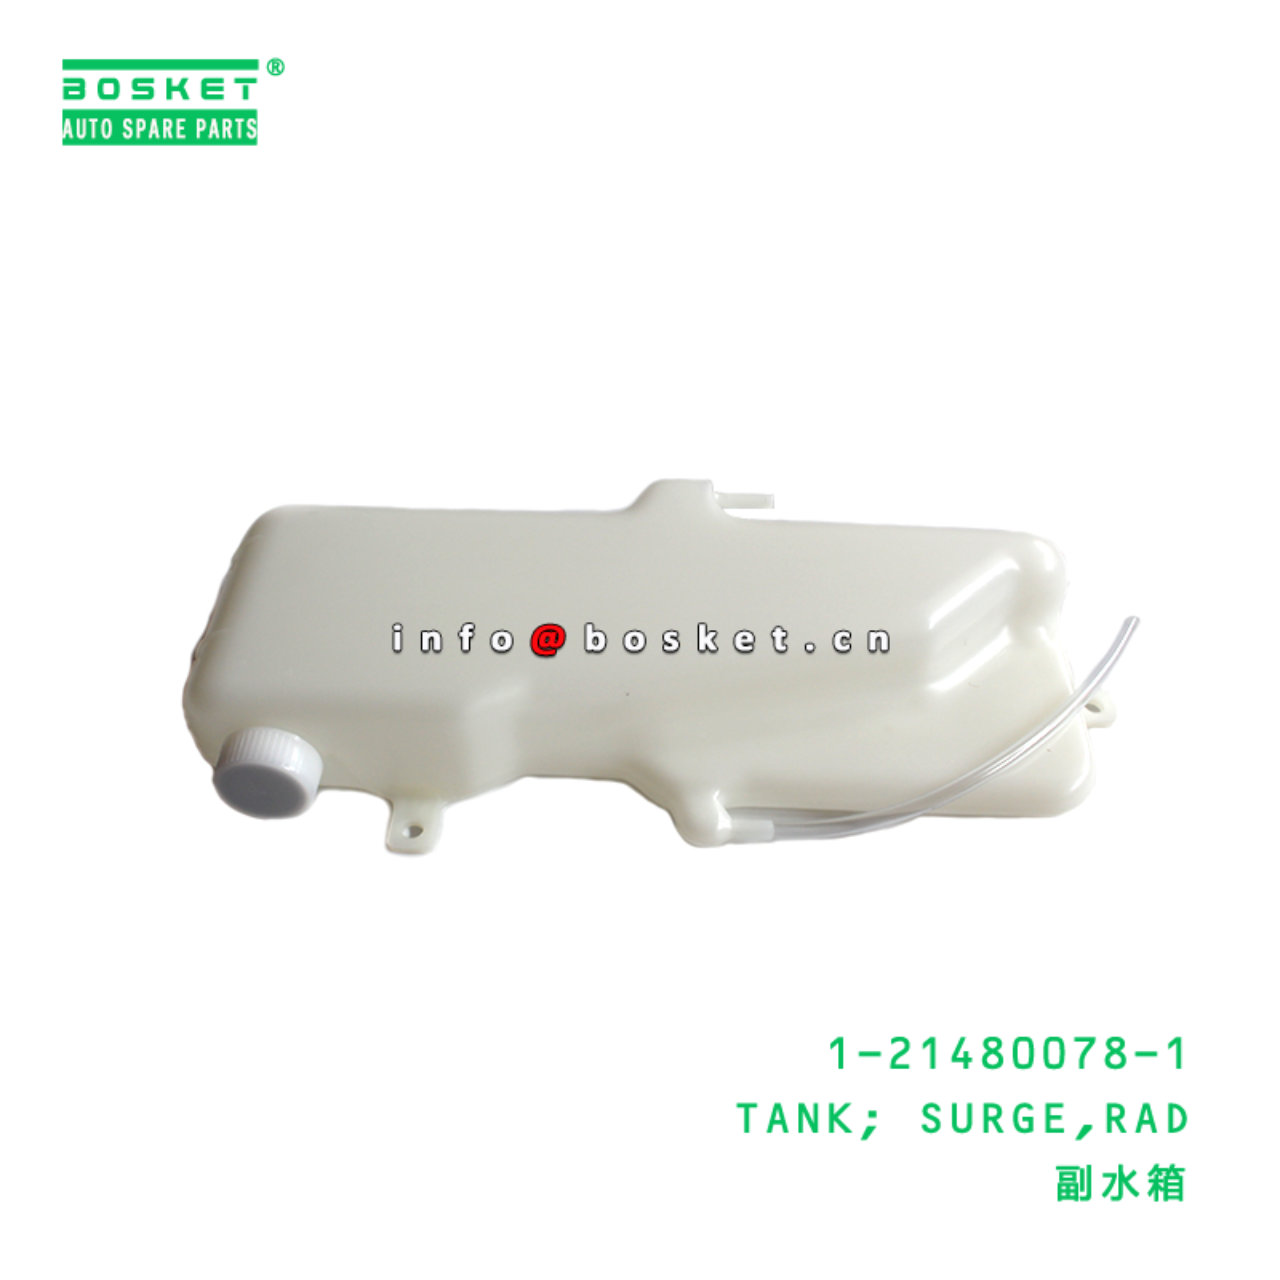 1-21480078-1 Rad Surge Tank 1214800781 Suitable for ISUZU FSR FTR